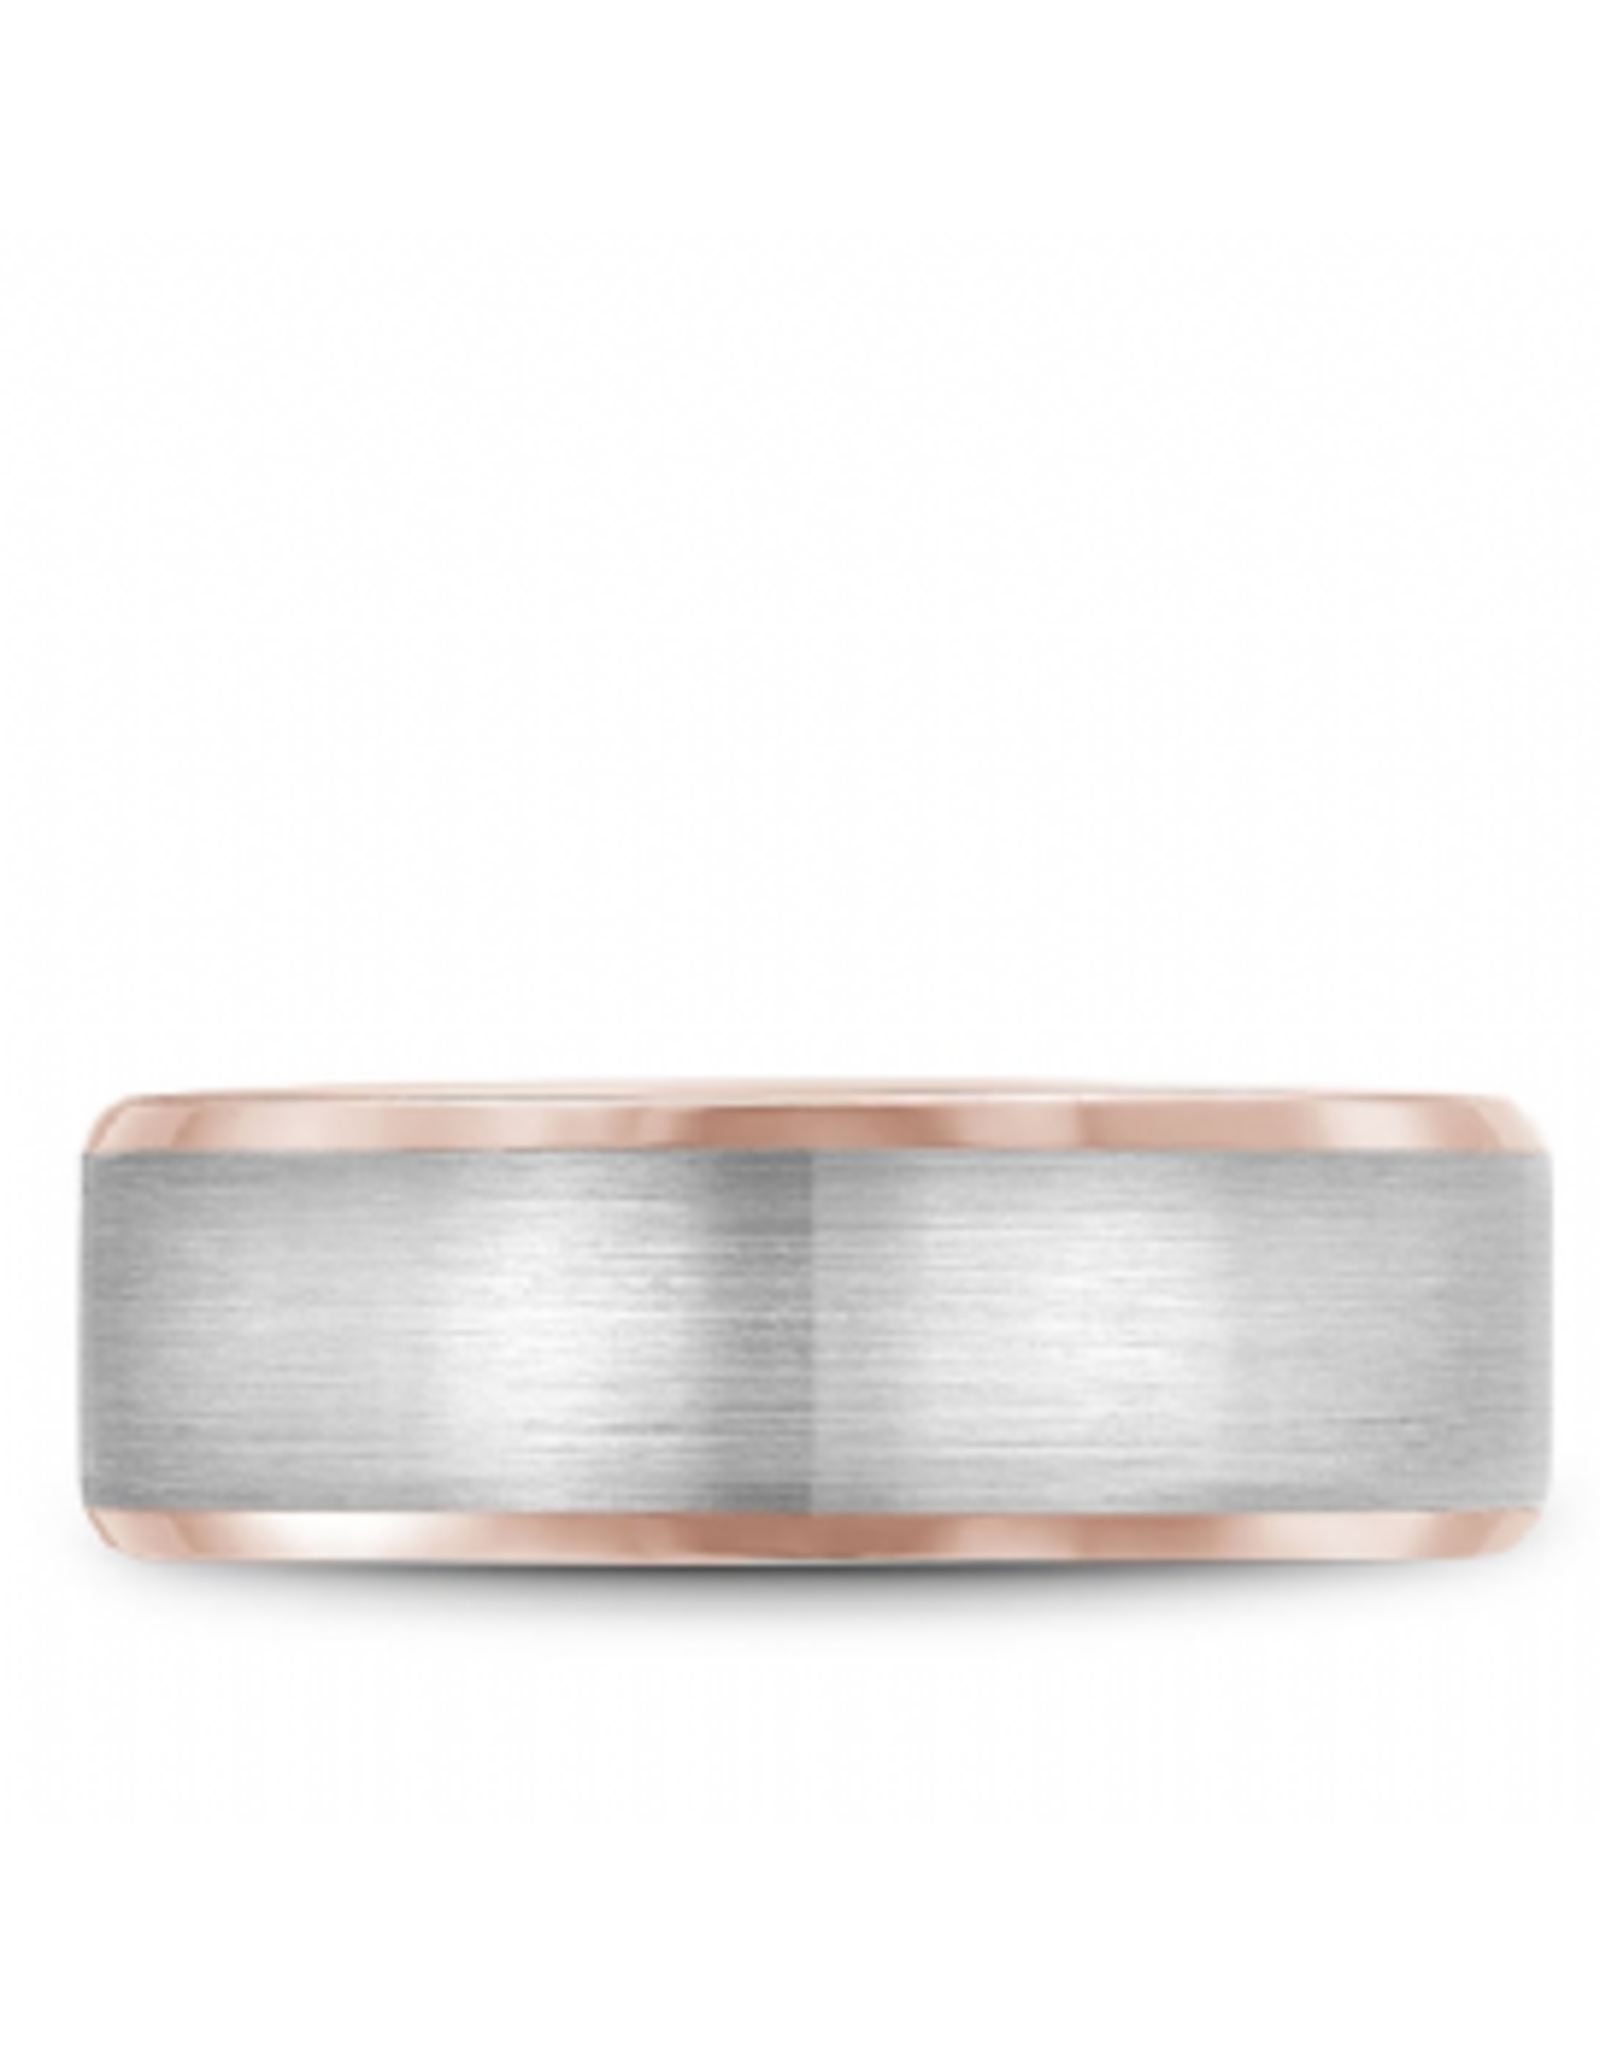 14K White & Rose Gold Band with Sandpaper Top & Beveled Edges - 7.5 mm